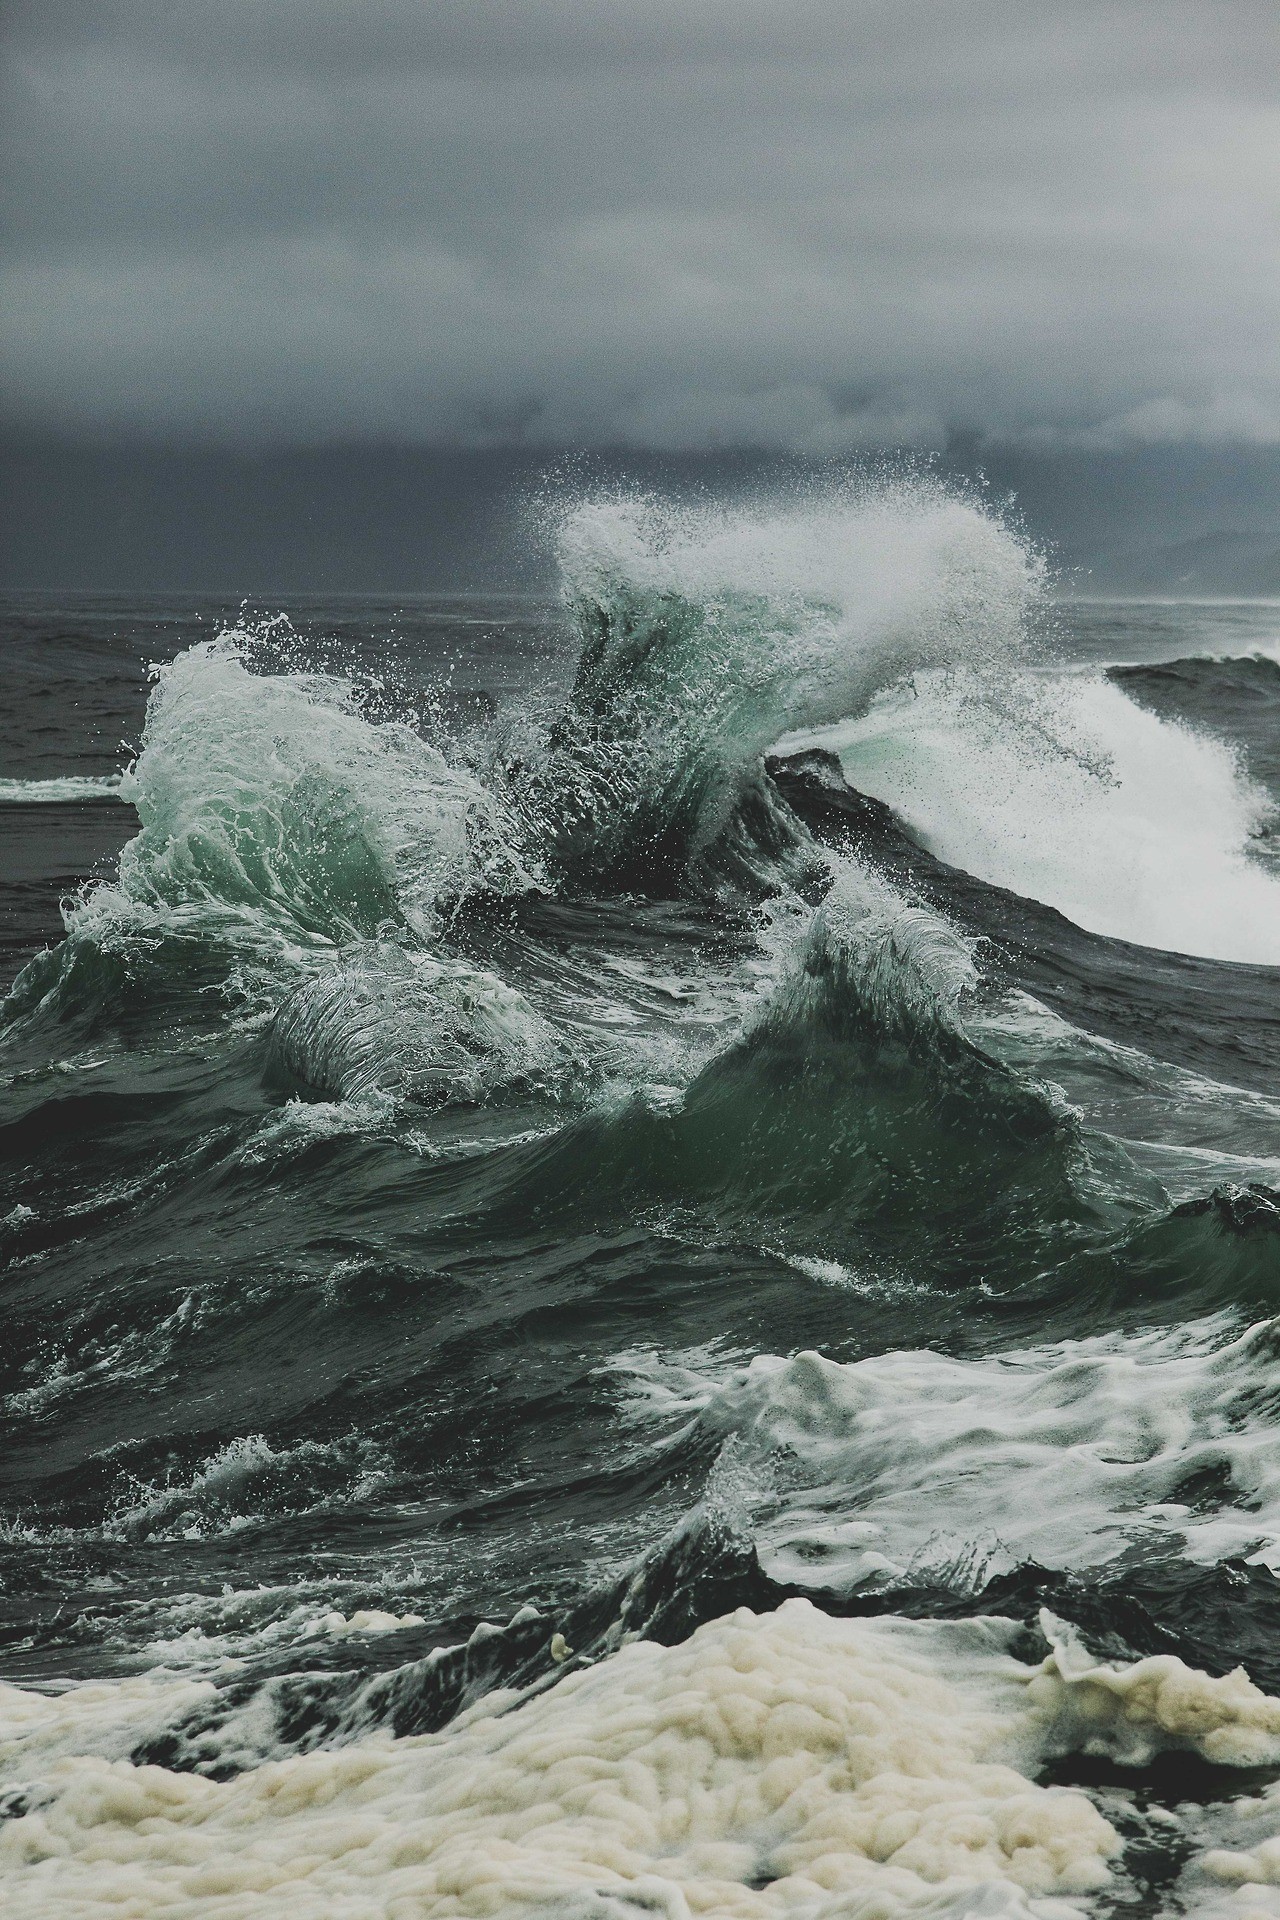 Stormy Ocean Wallpaper 58 Images